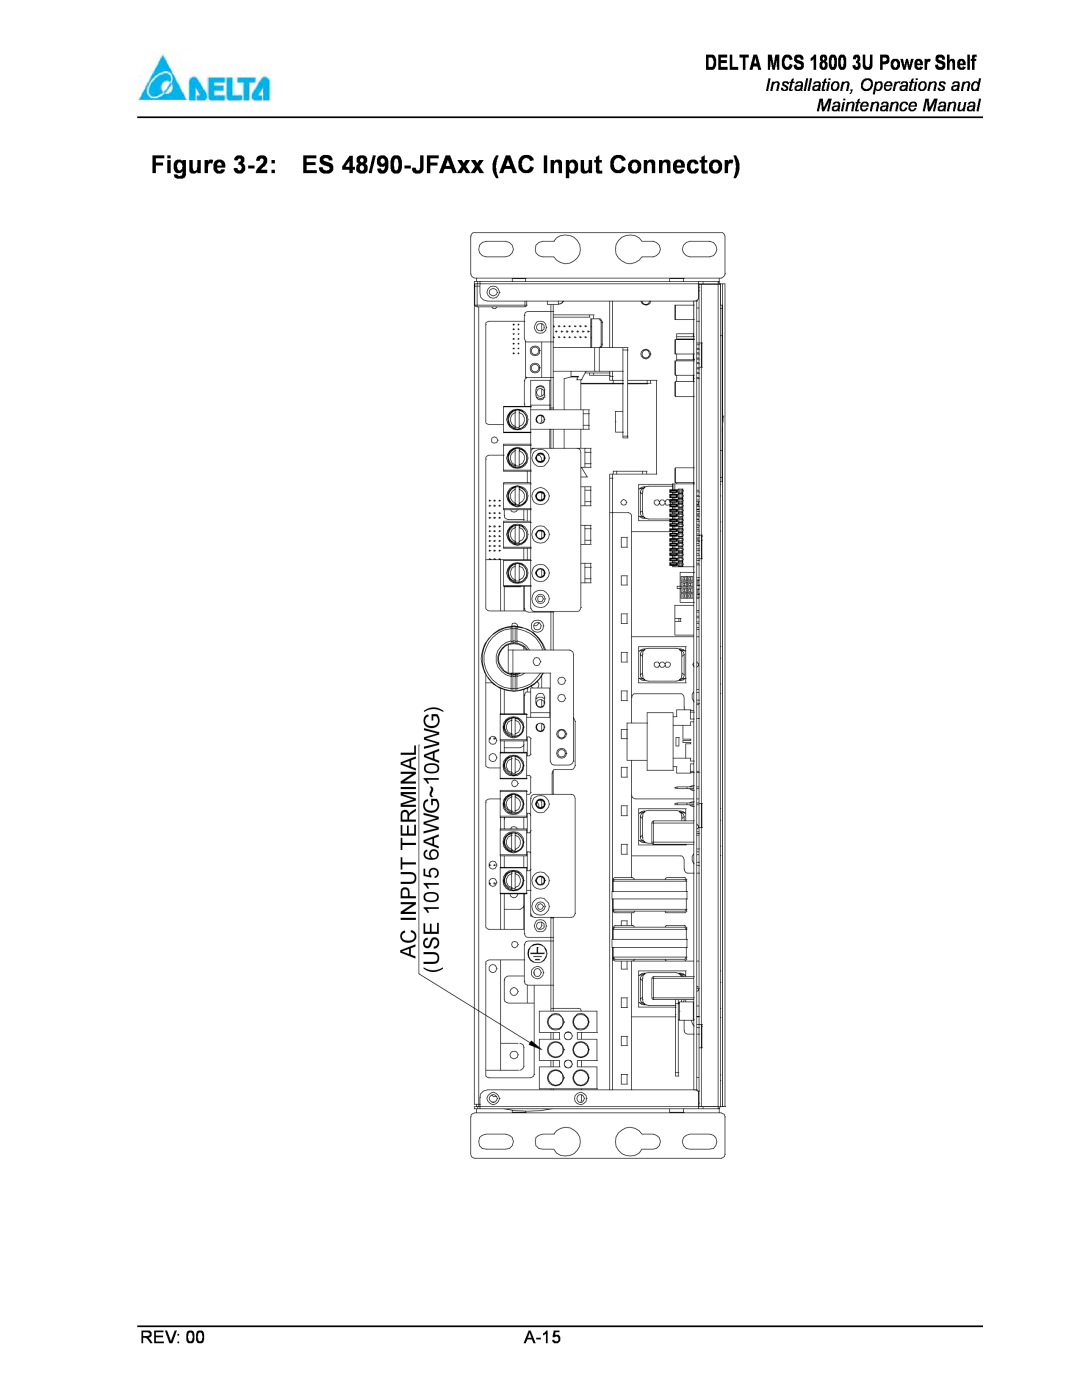 Delta MCS-1800 2 ES 48/90-JFAxx AC Input Connector, DELTA MCS 1800 3U Power Shelf, AC INPUT TERMINAL USE 1015 6AWG~10AWG 